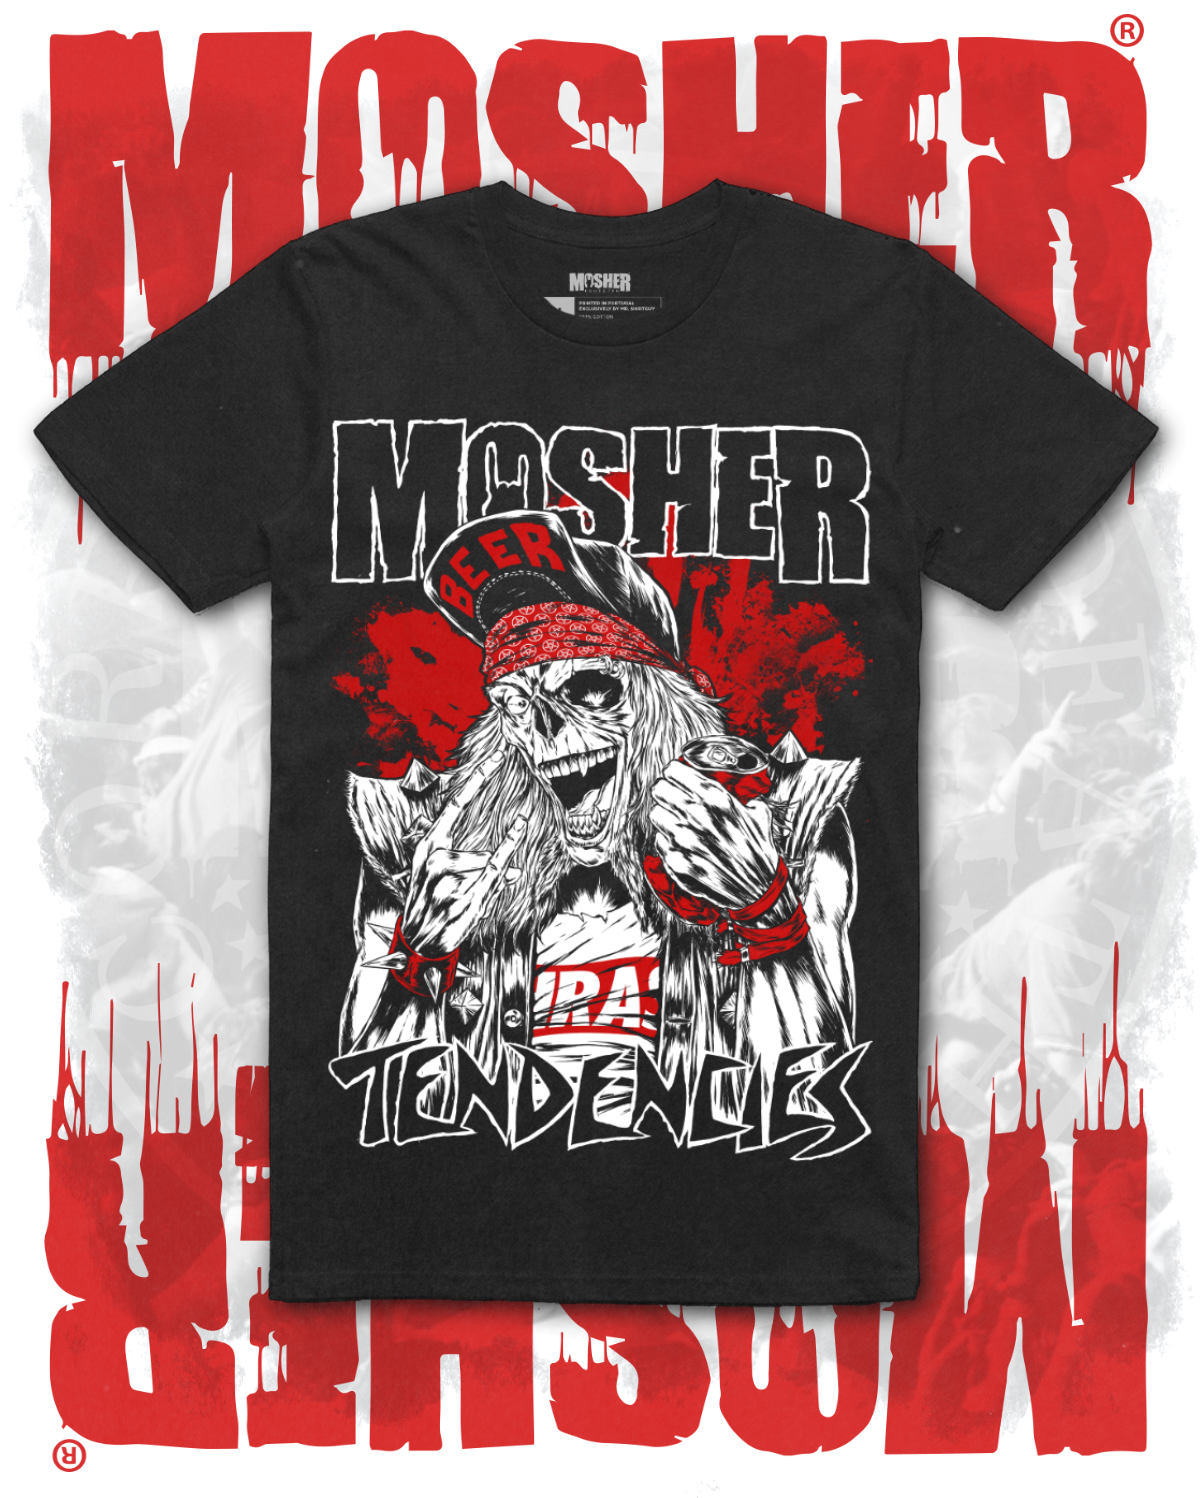 Mosher Clothing™ - "Mosher Tendencies" T-Shirt for metalheads